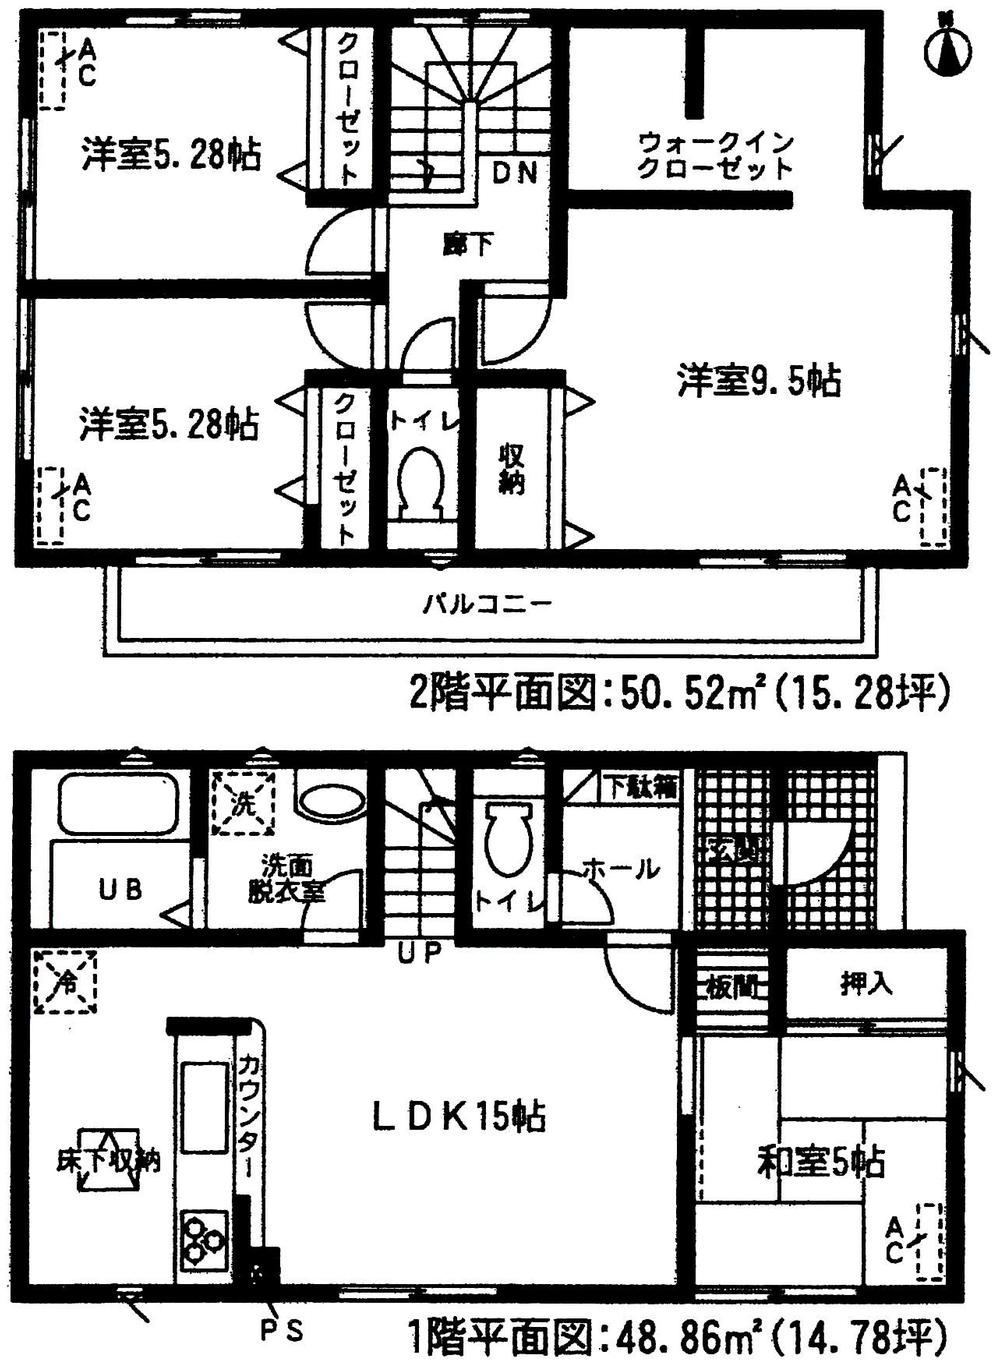 Floor plan. (1 Building), Price 26.5 million yen, 4LDK, Land area 120.12 sq m , Building area 99.38 sq m